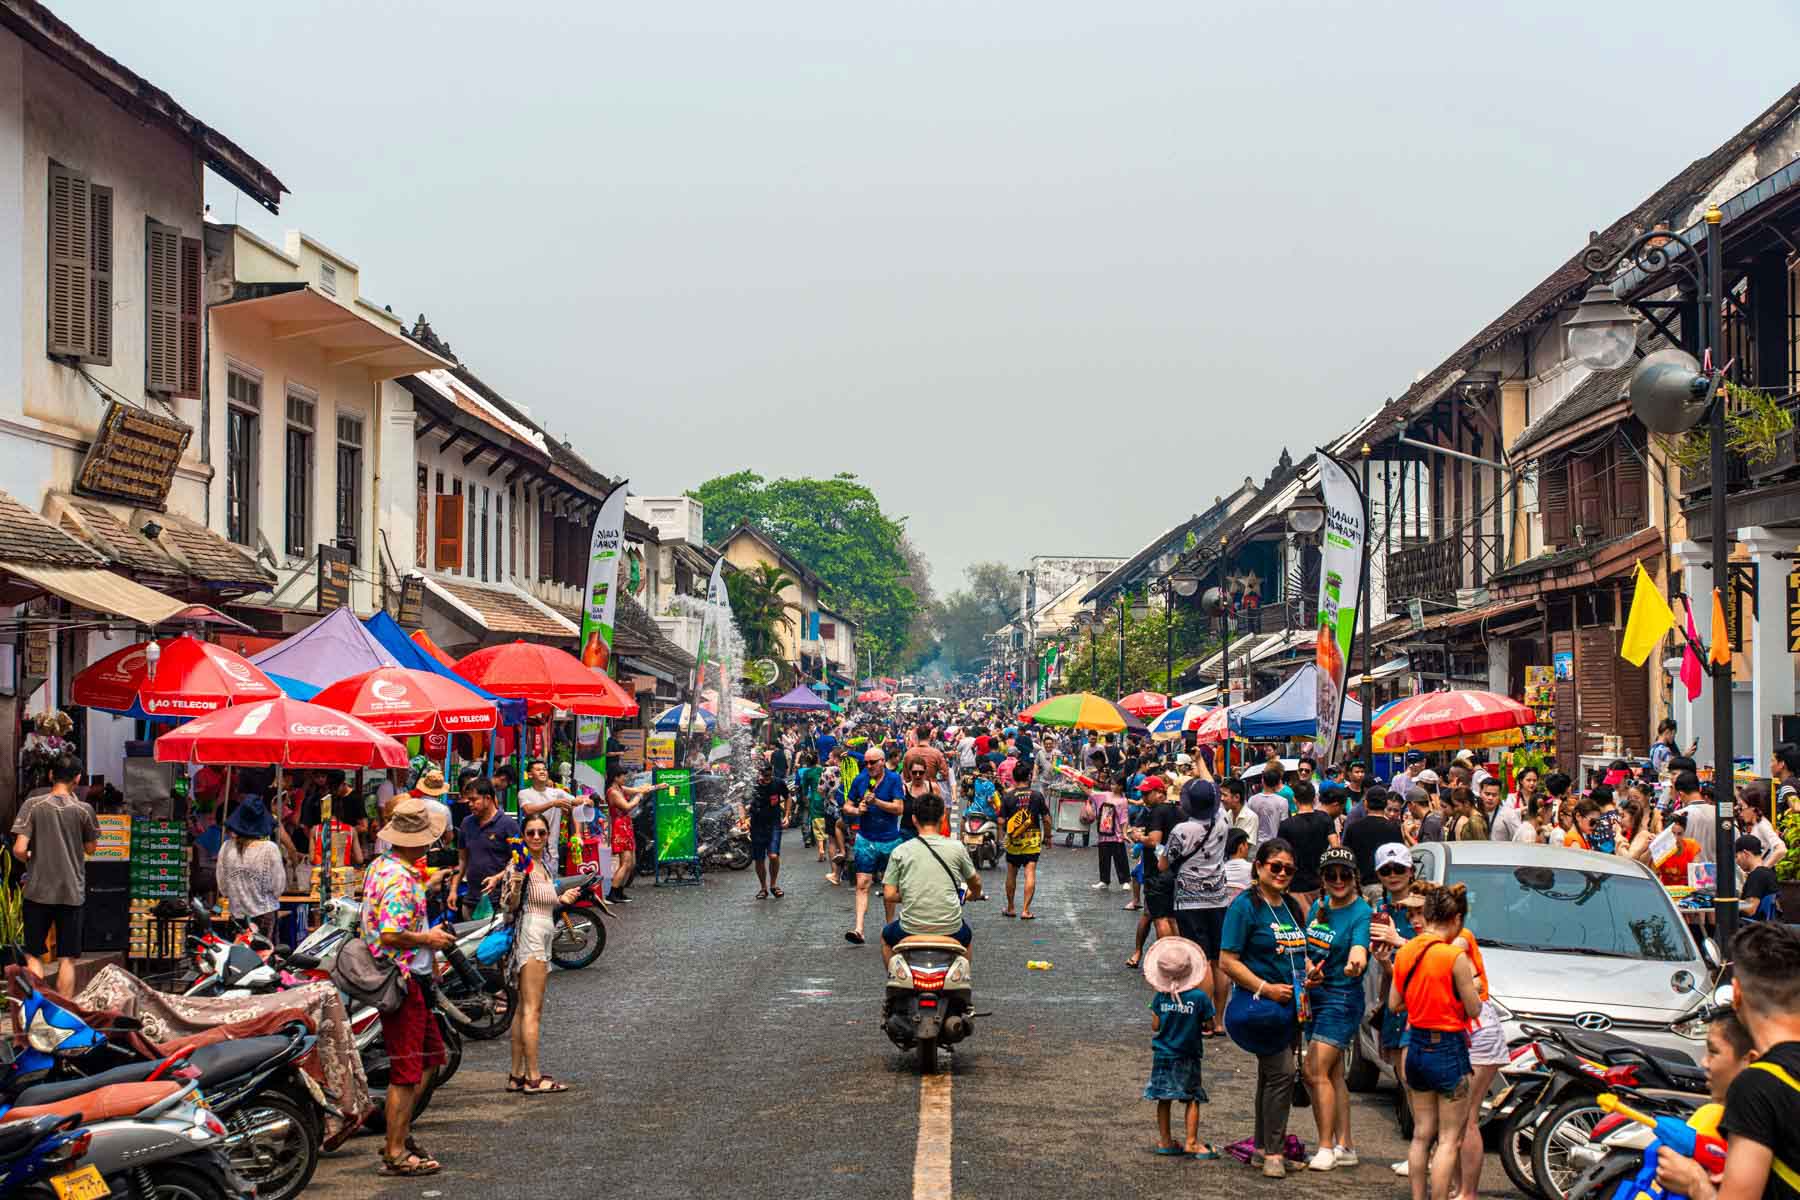 /fm/Files//Pictures/Ido Uploads(1)/Asia/Laos/Luang Prabang/Luang Prabang - Pi mai - Main Shops Street View.jpg